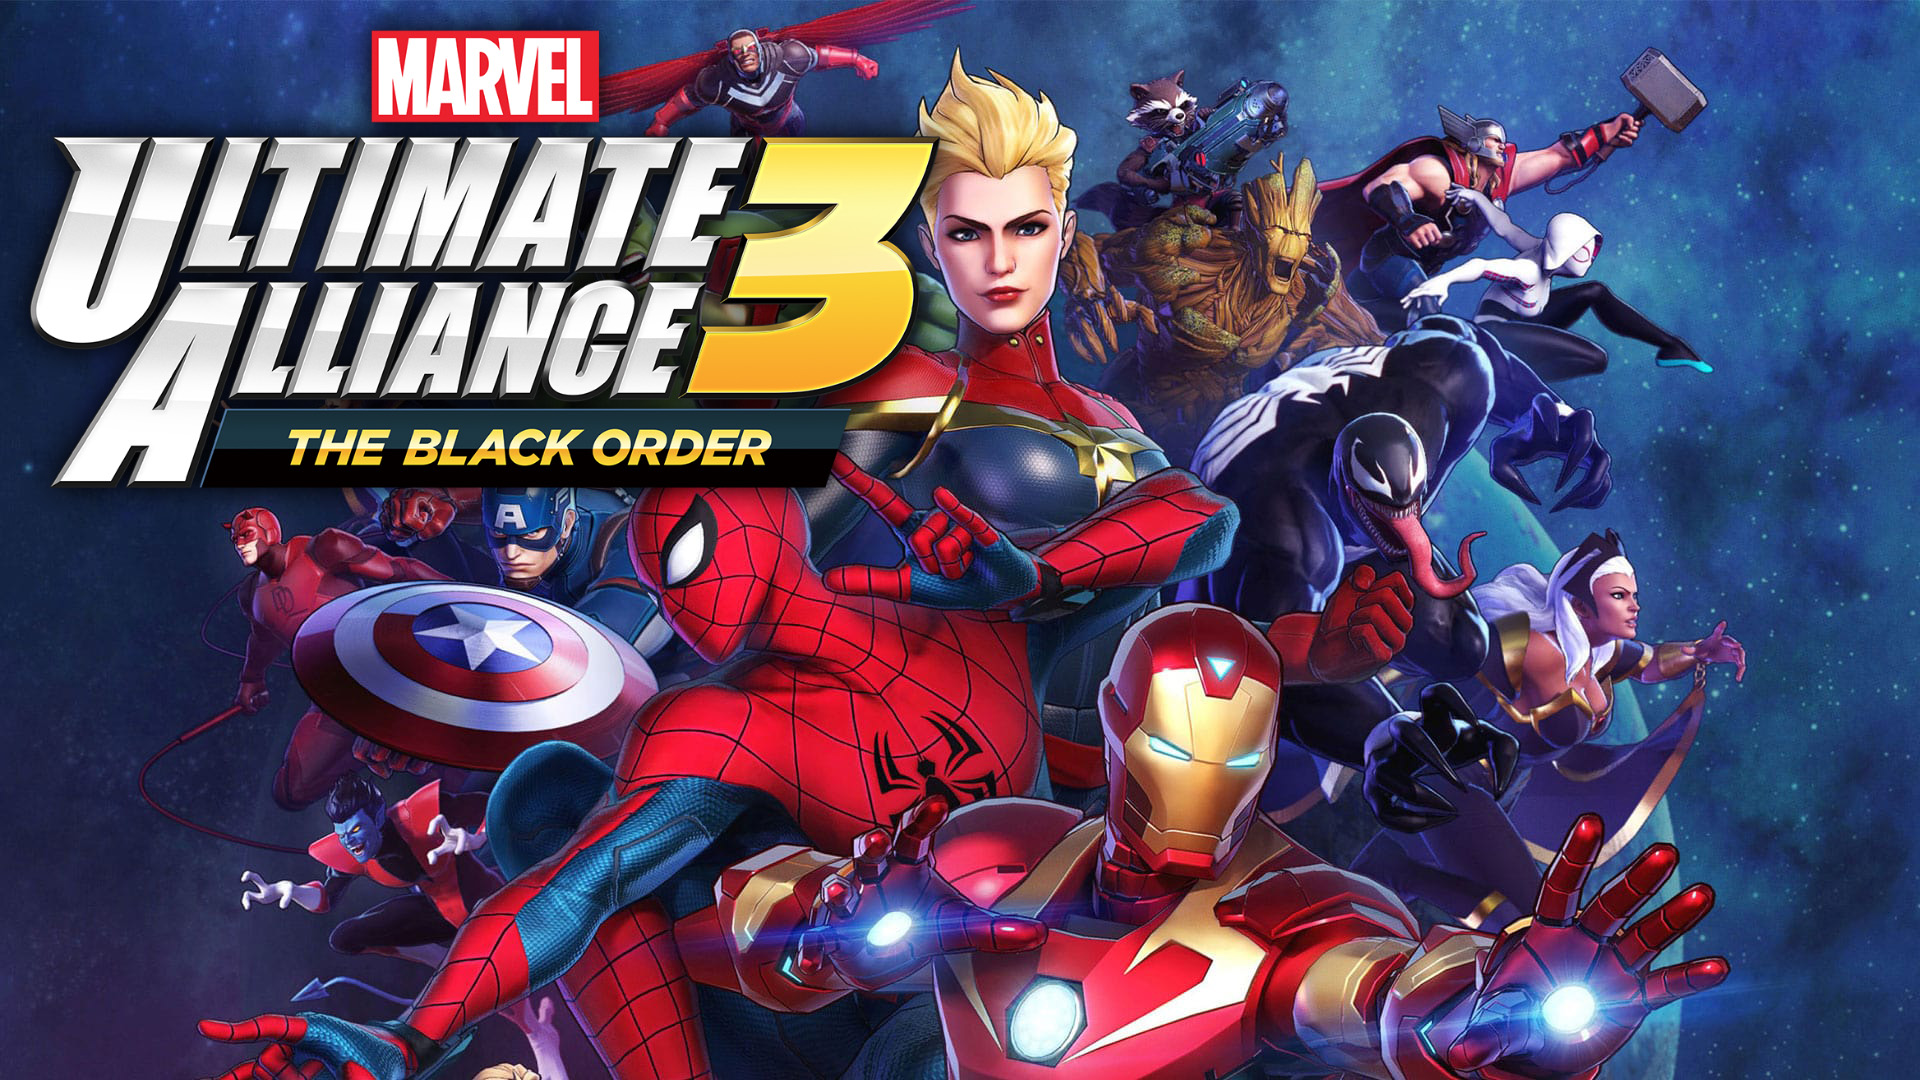 Marvel Ultimate Alliance 3 cover